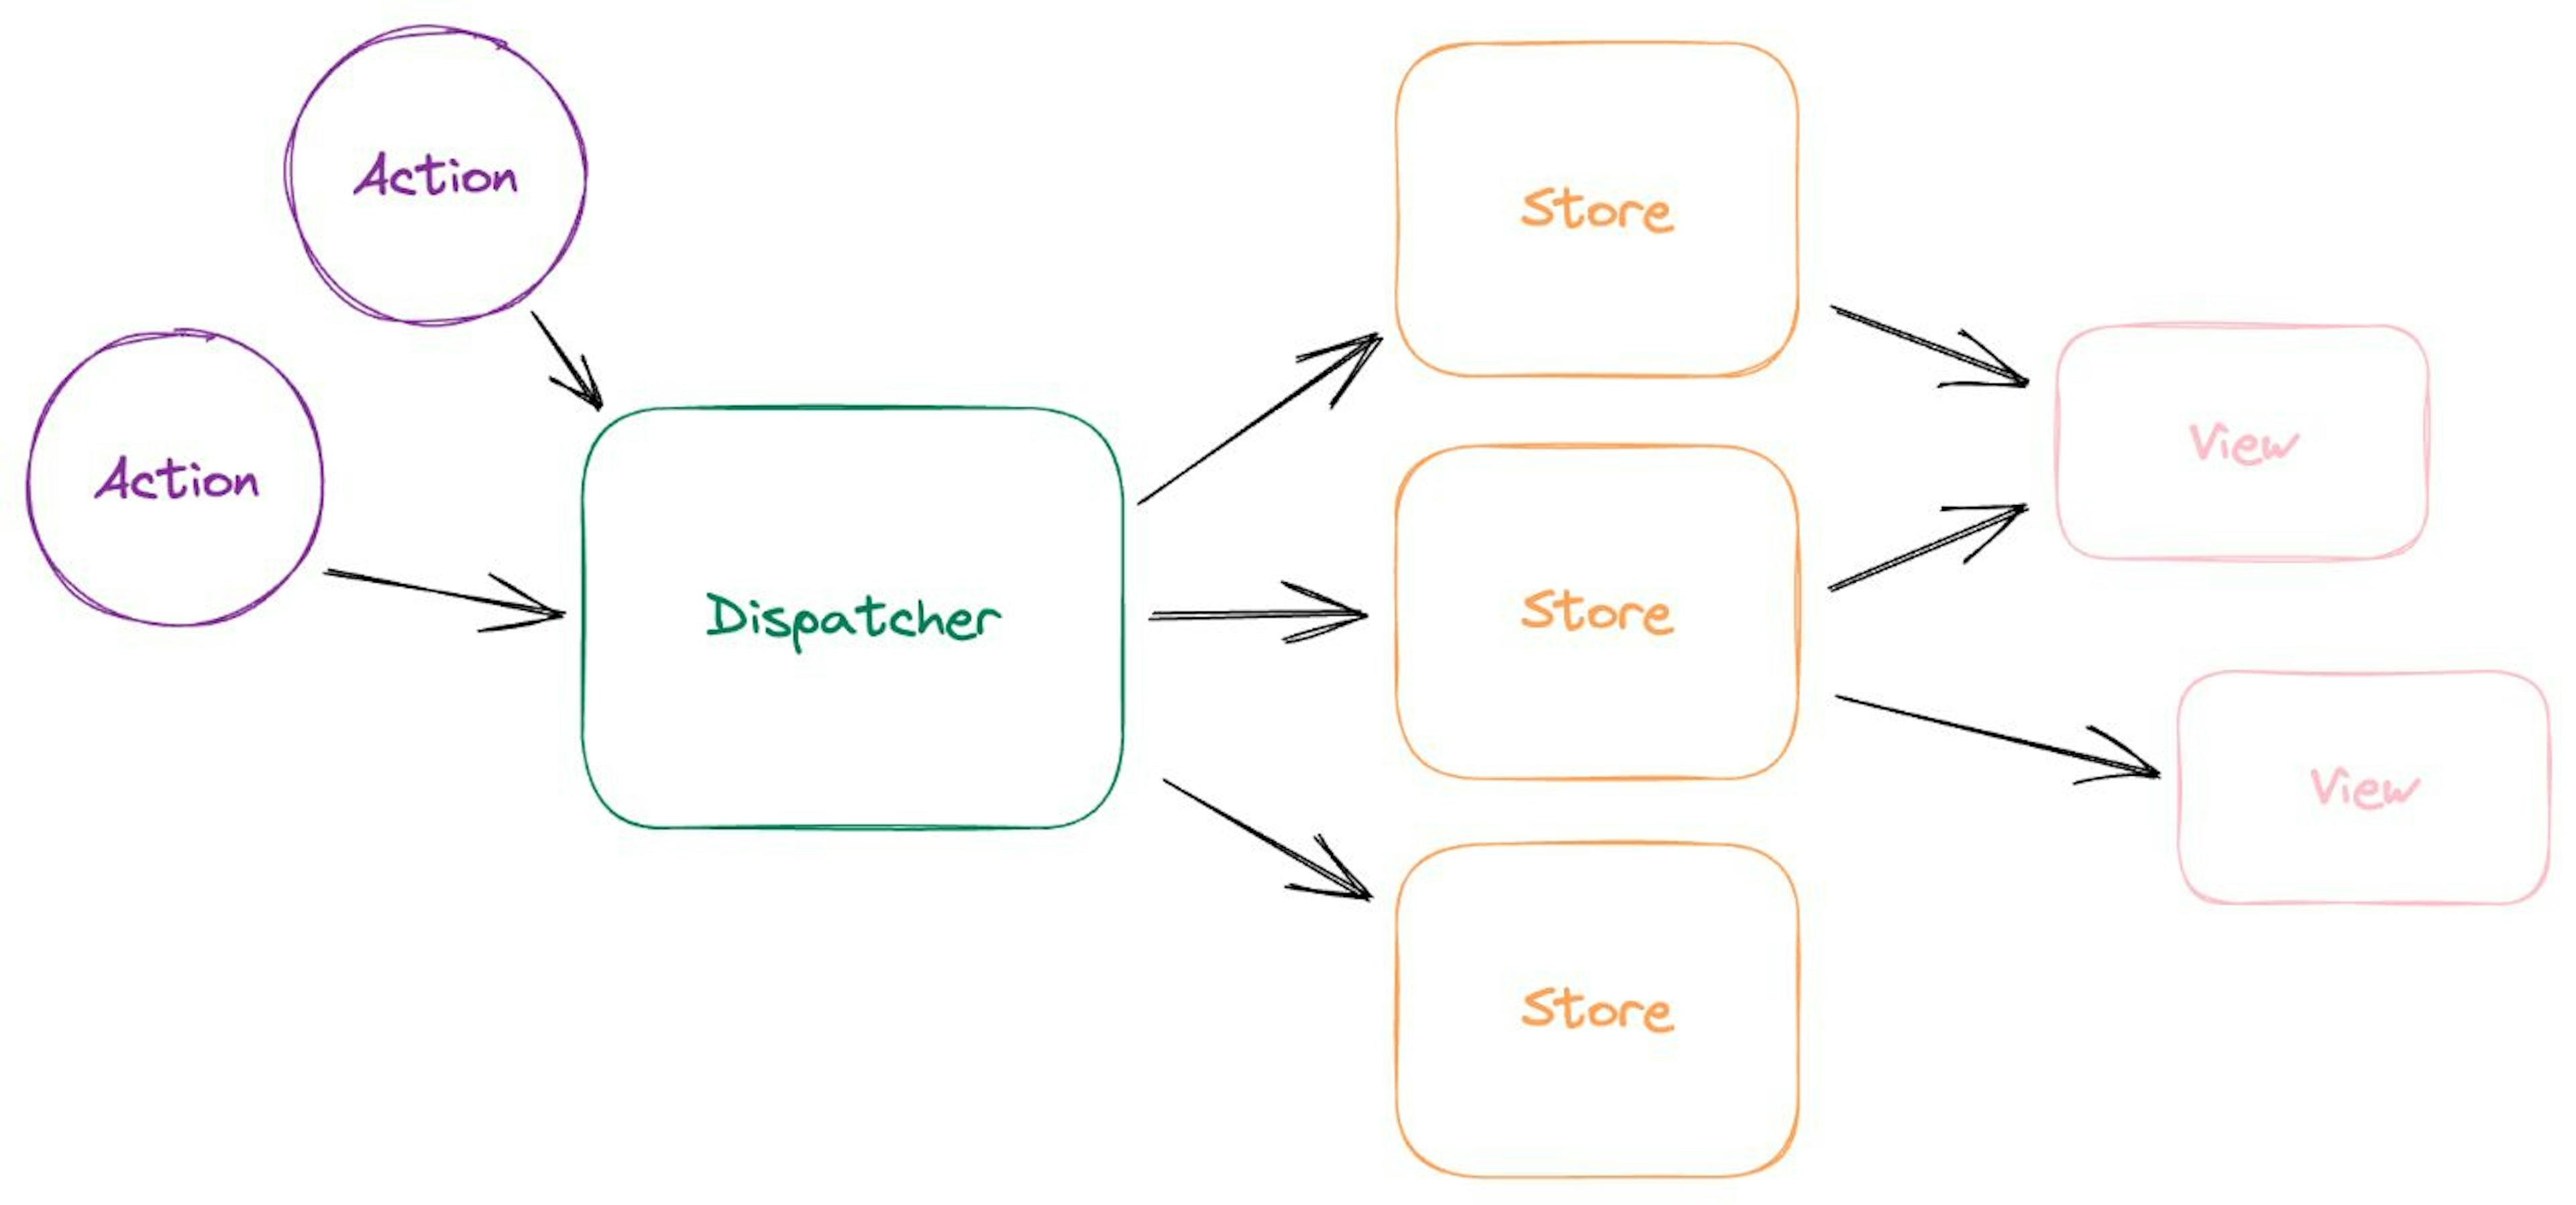 Actions -> Dispatcher -> Stores -> Views